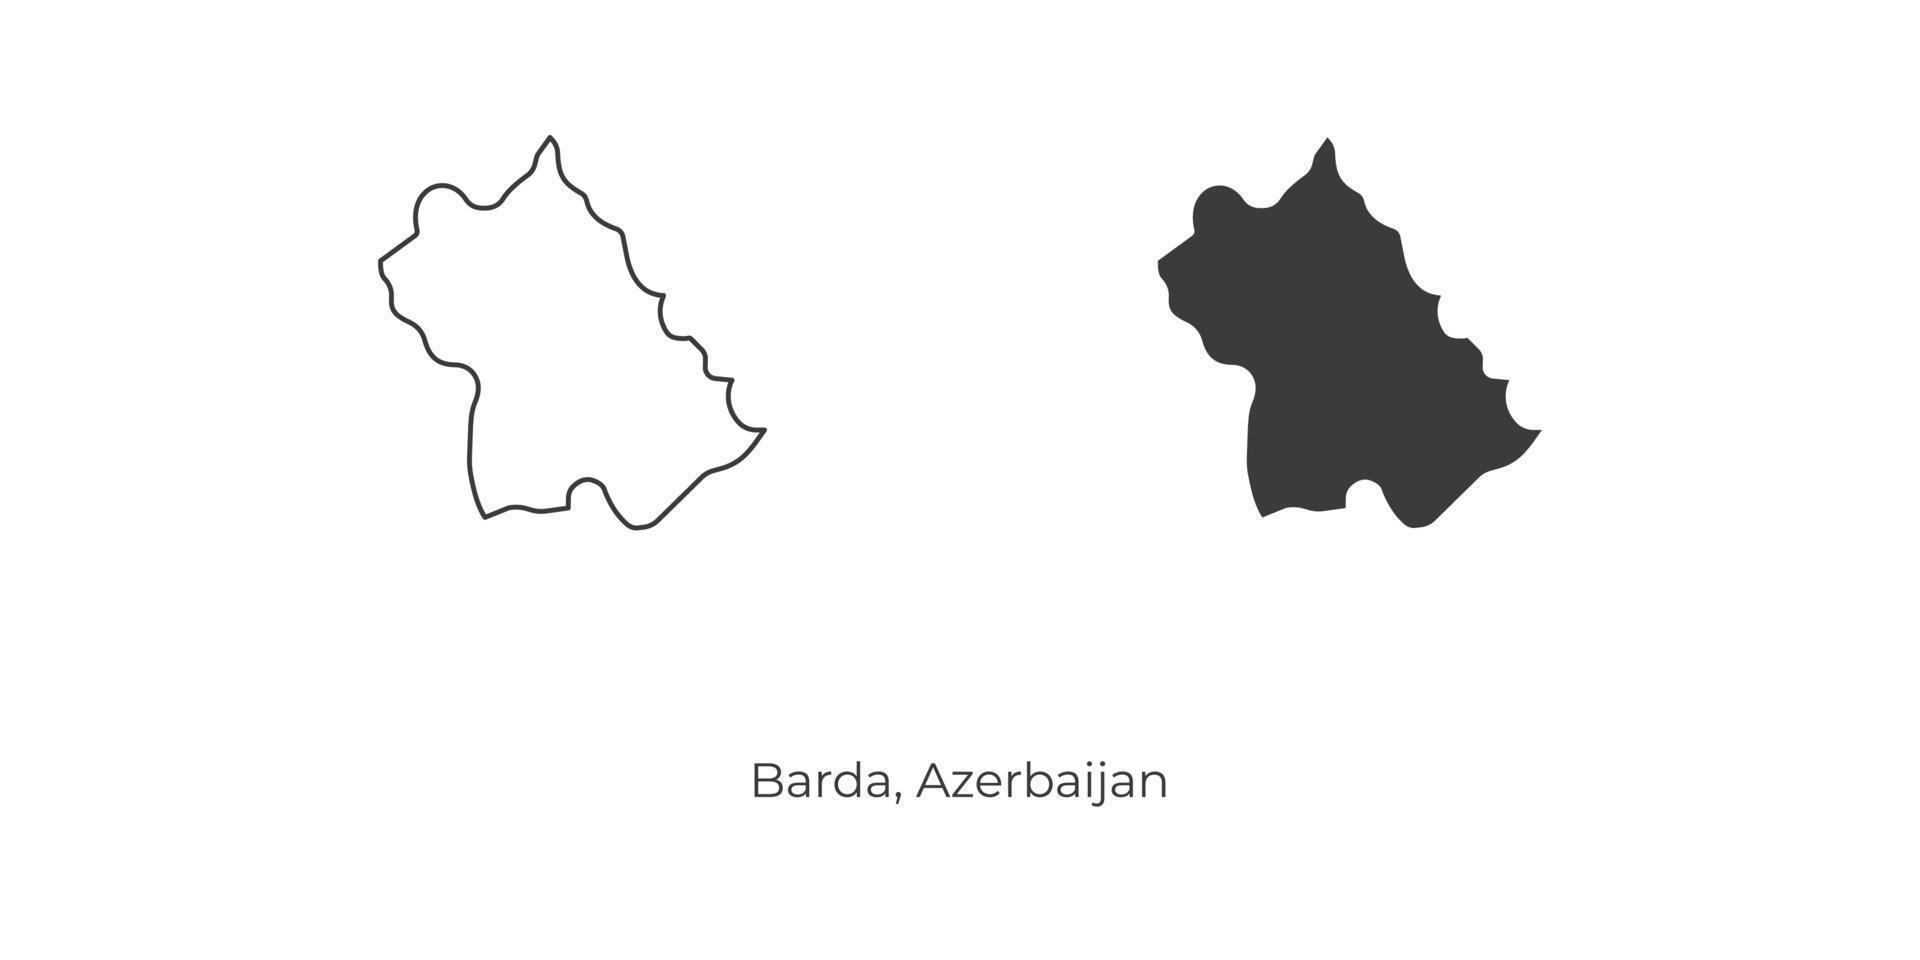 Simple vector illustration of Barda map, Azerbaijan.